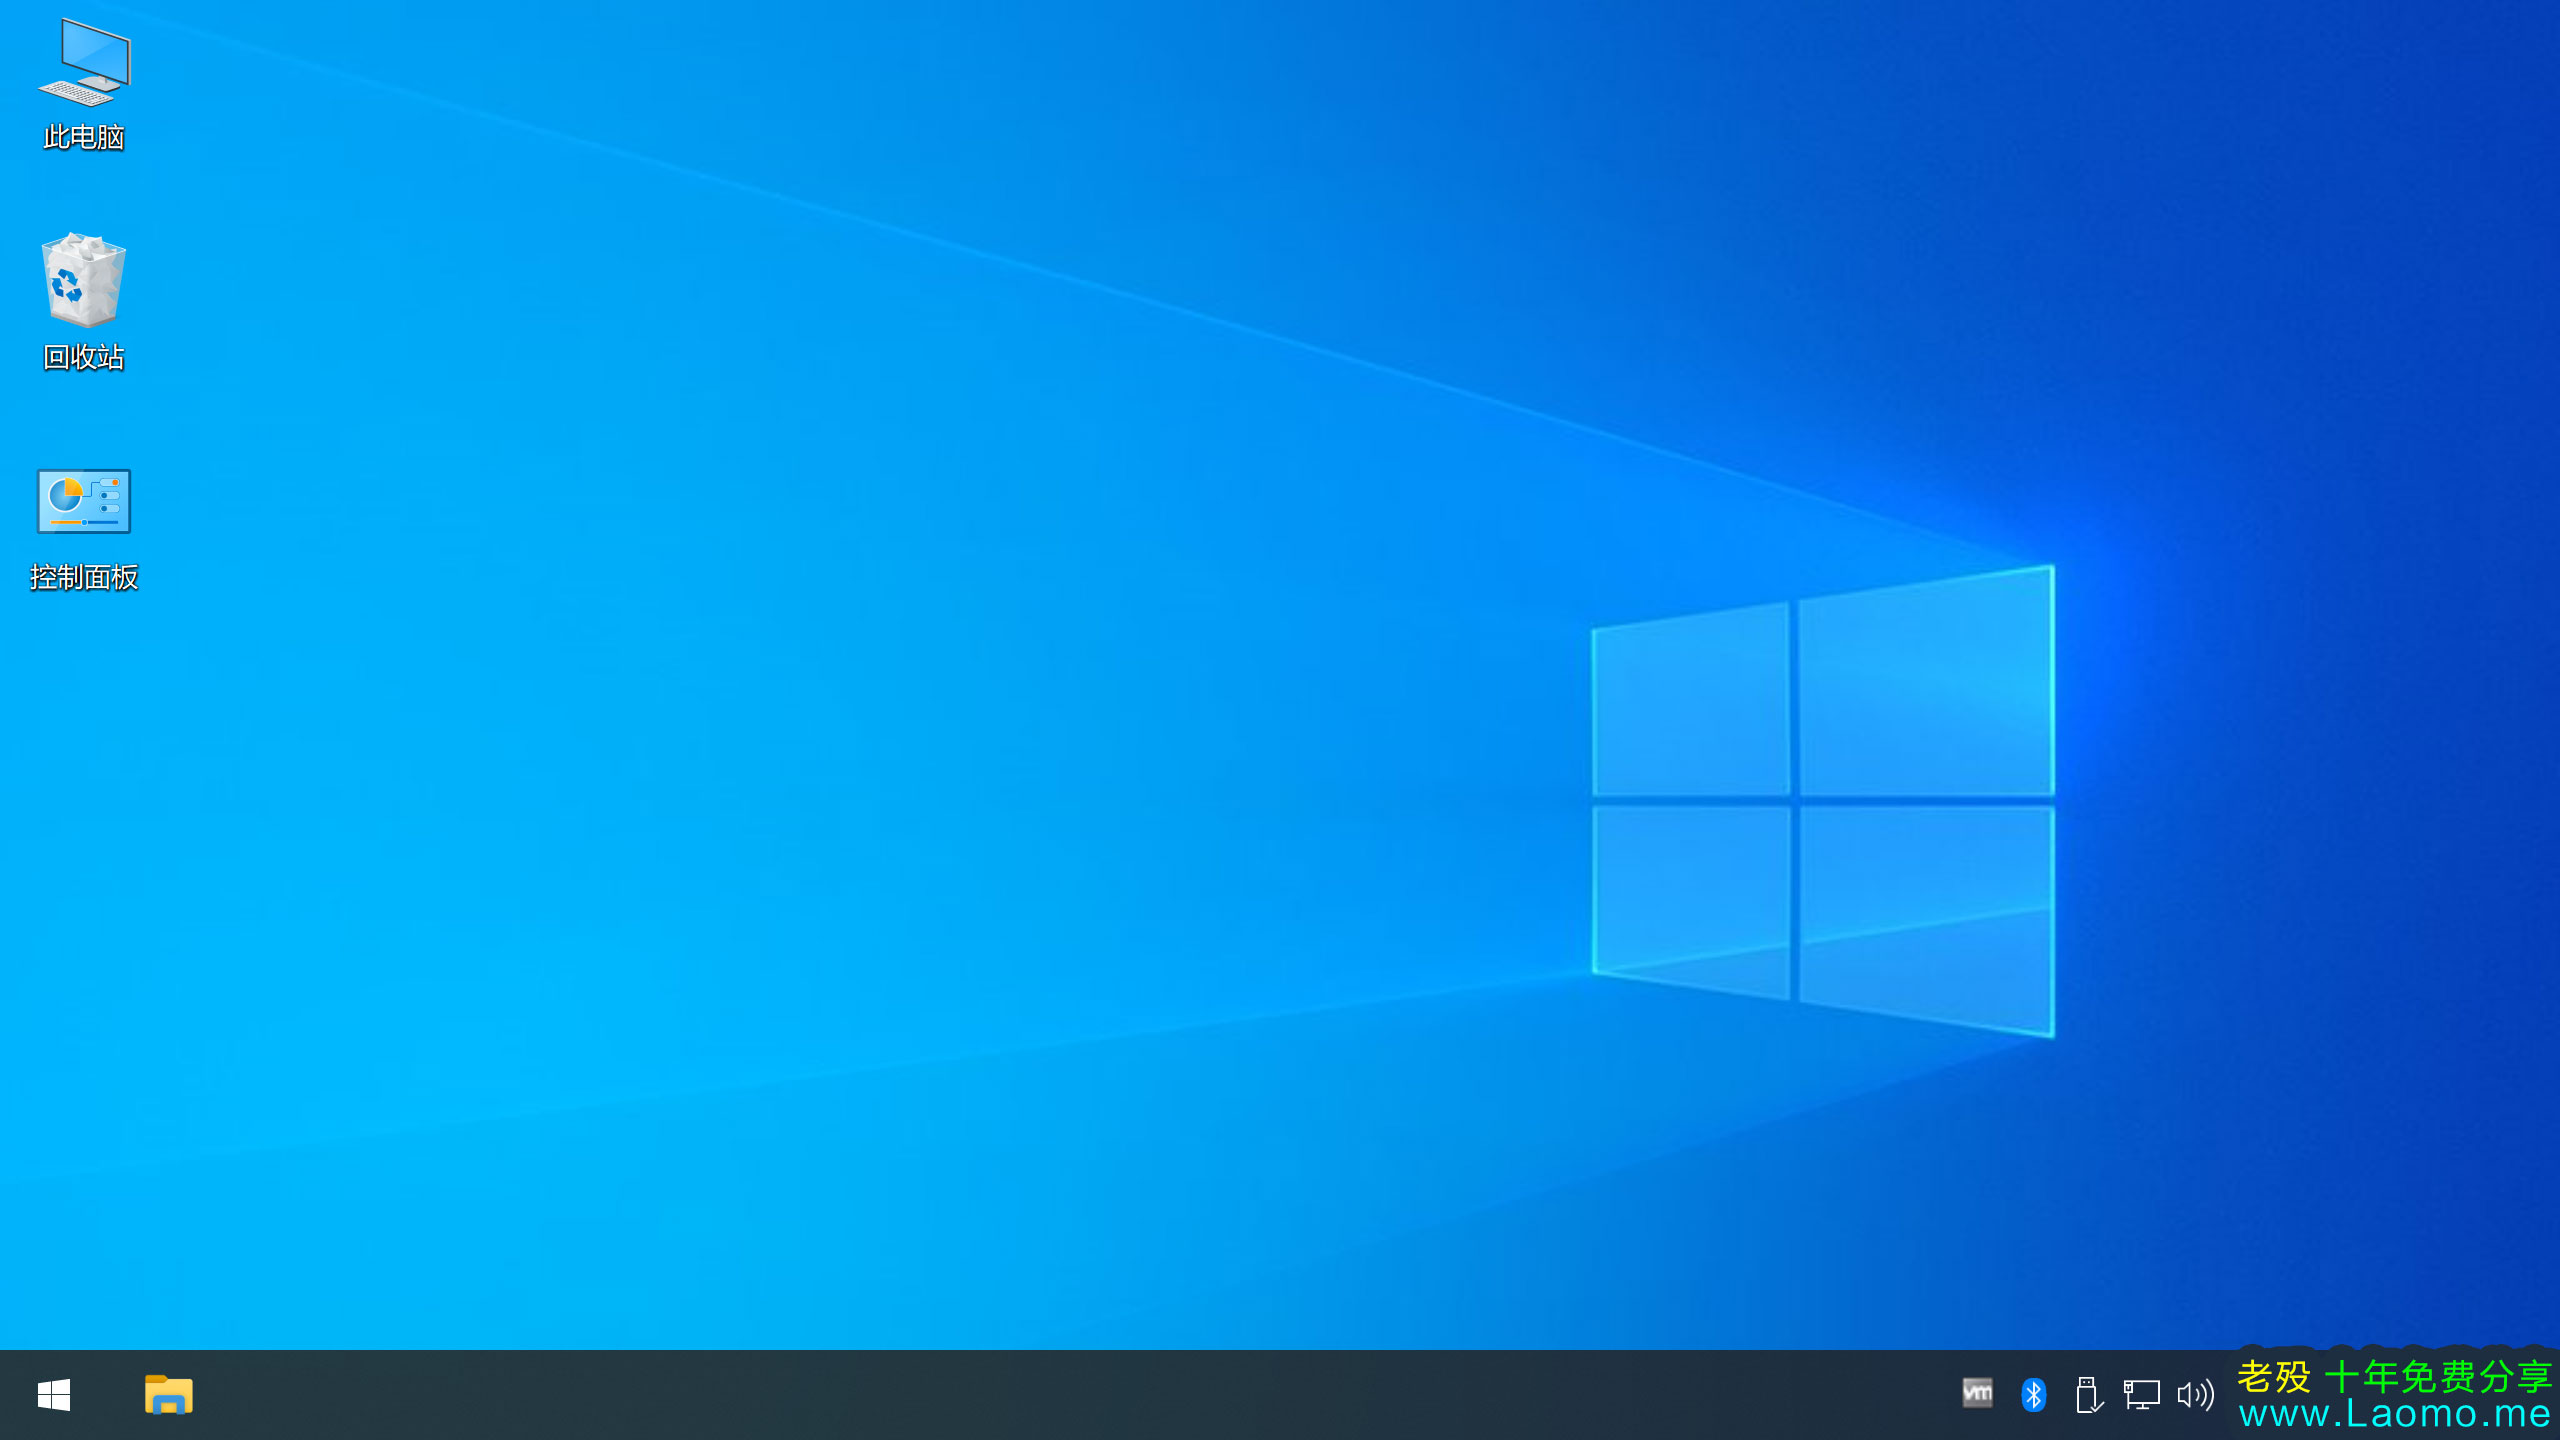 Windows10 04 264 64 七合一纯净精简版 不忘初心